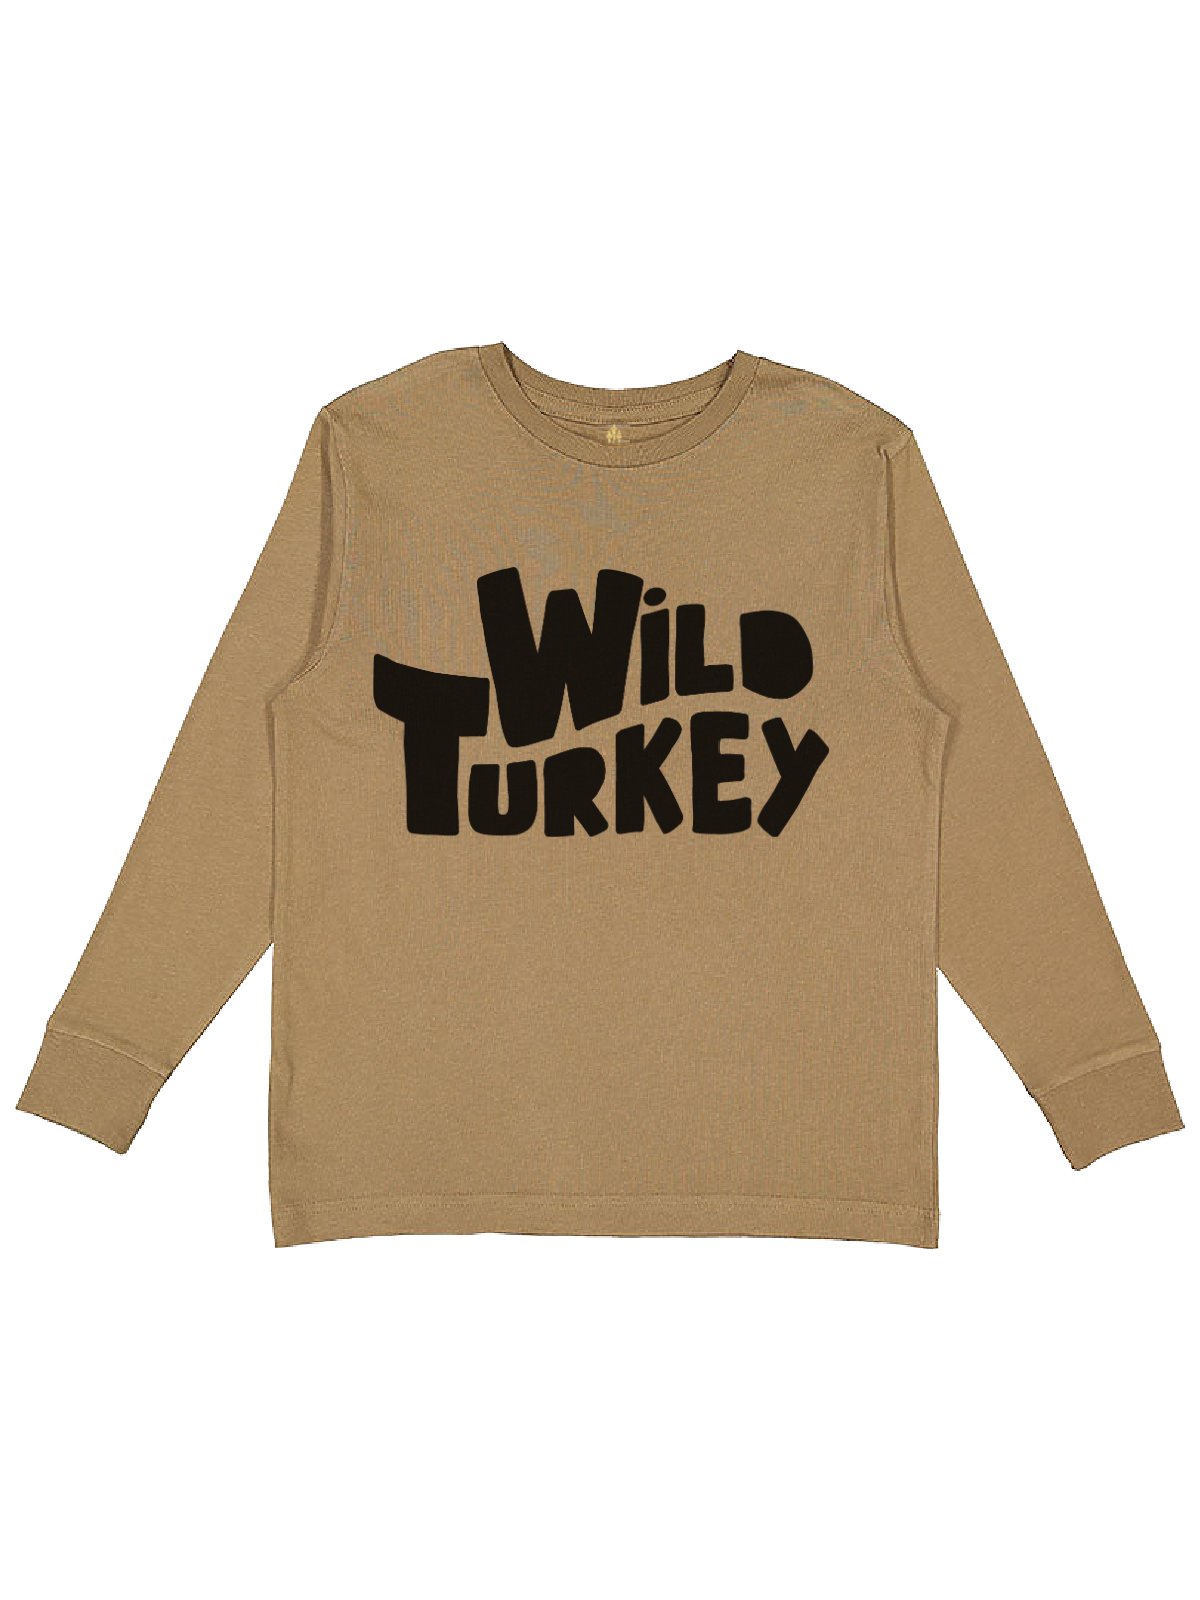 Wild Turkey Kids Thanksgiving Shirt in Coyote Brown Long Sleeve